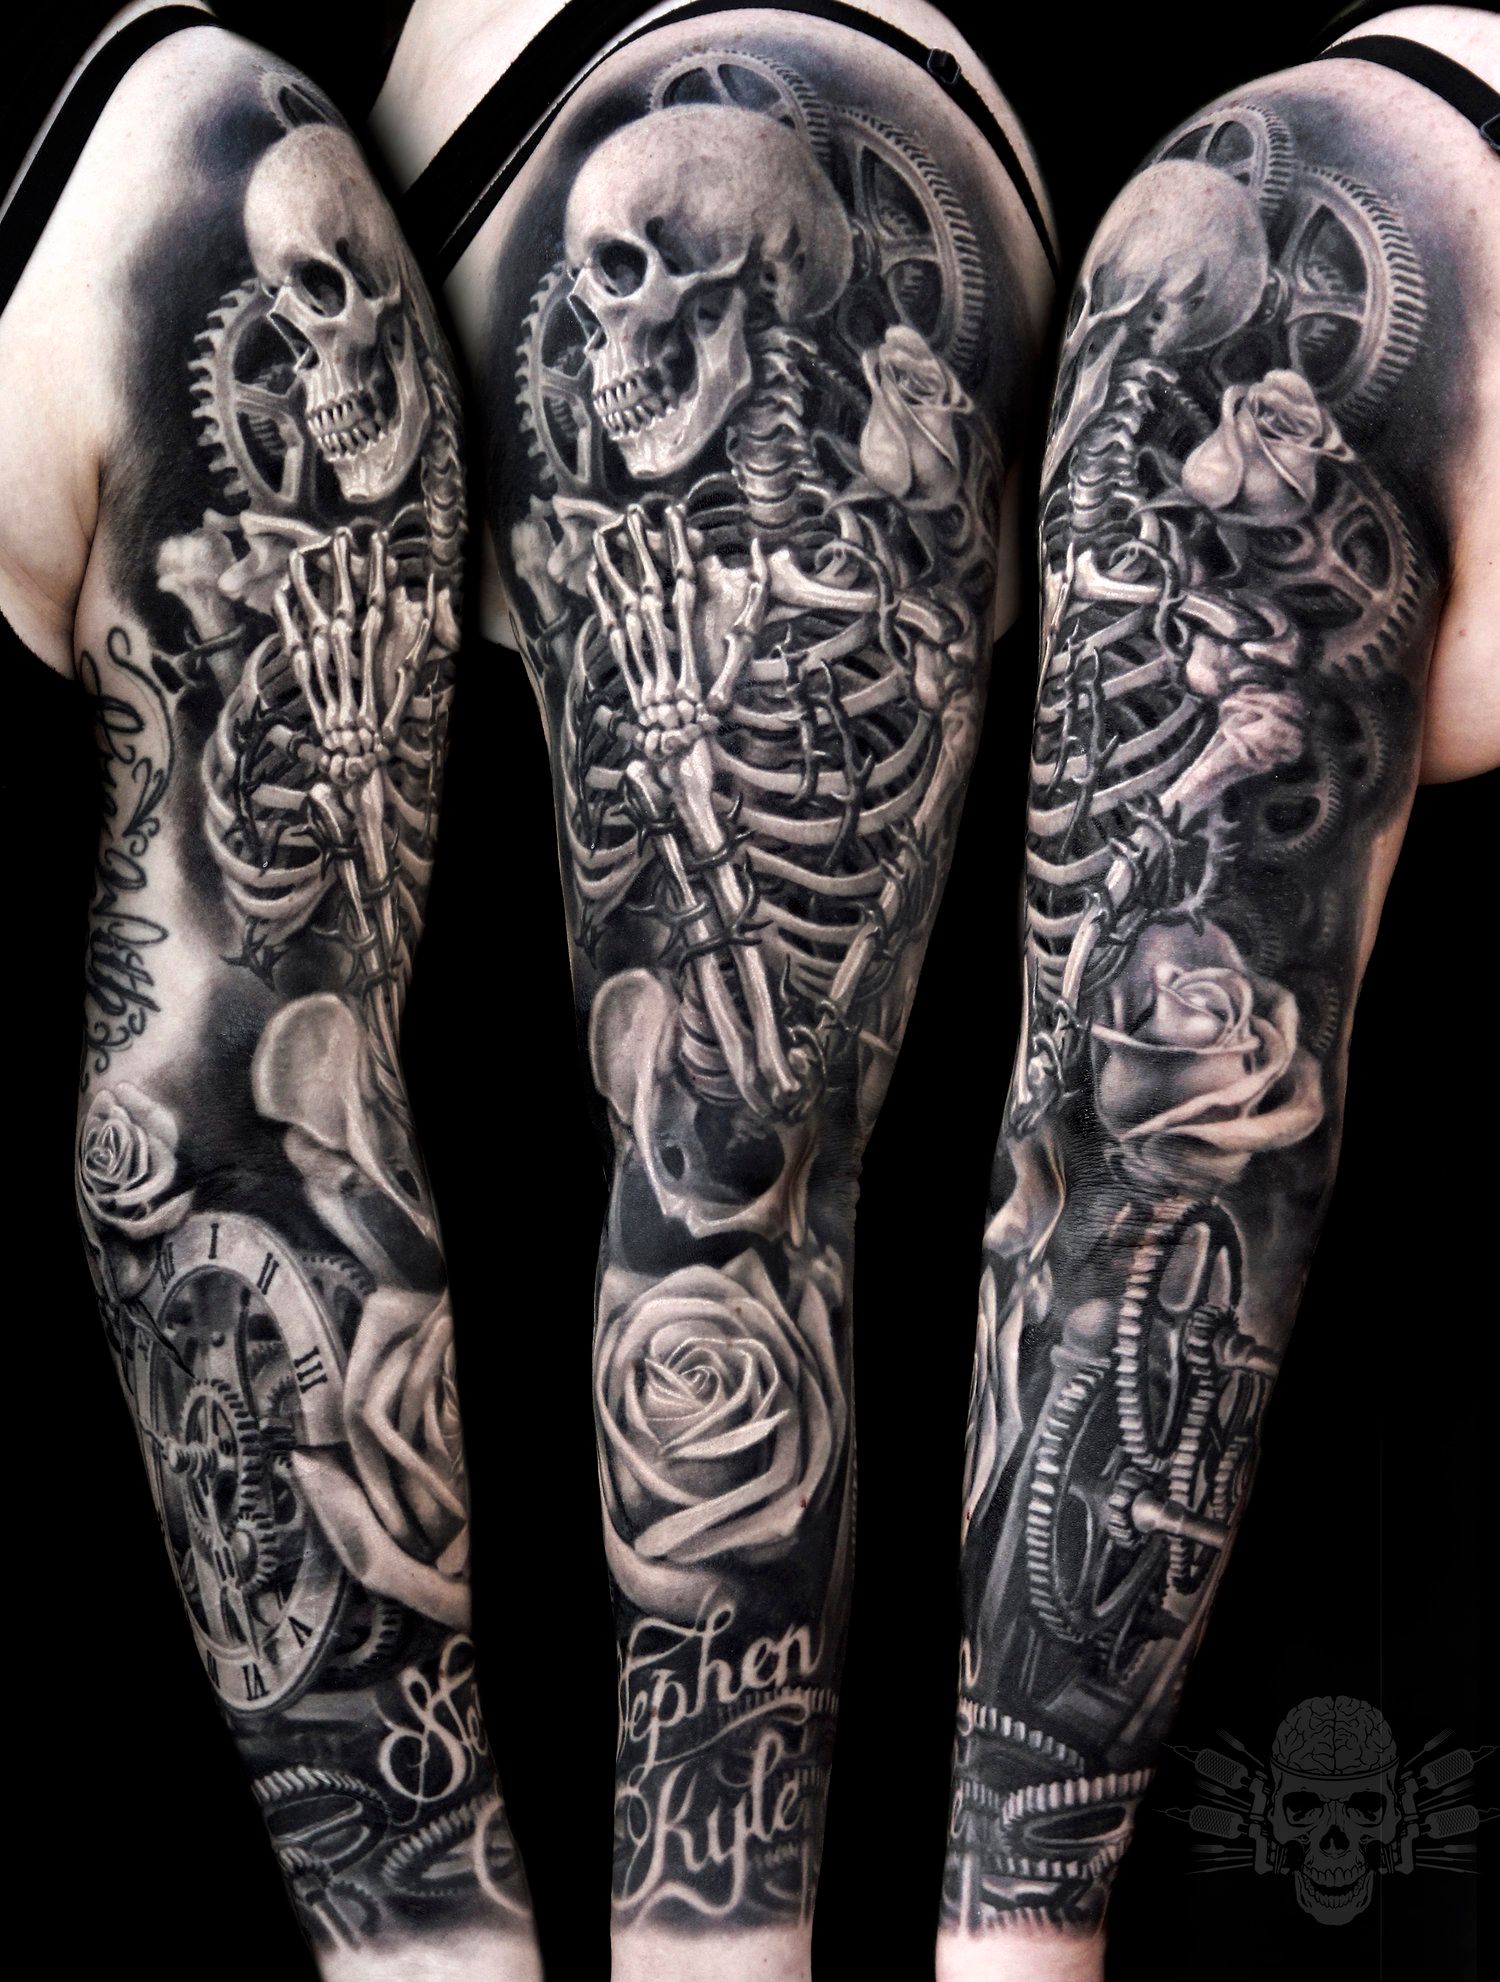 Skeleton Tattoo Sleeves by jianzhi88 on DeviantArt